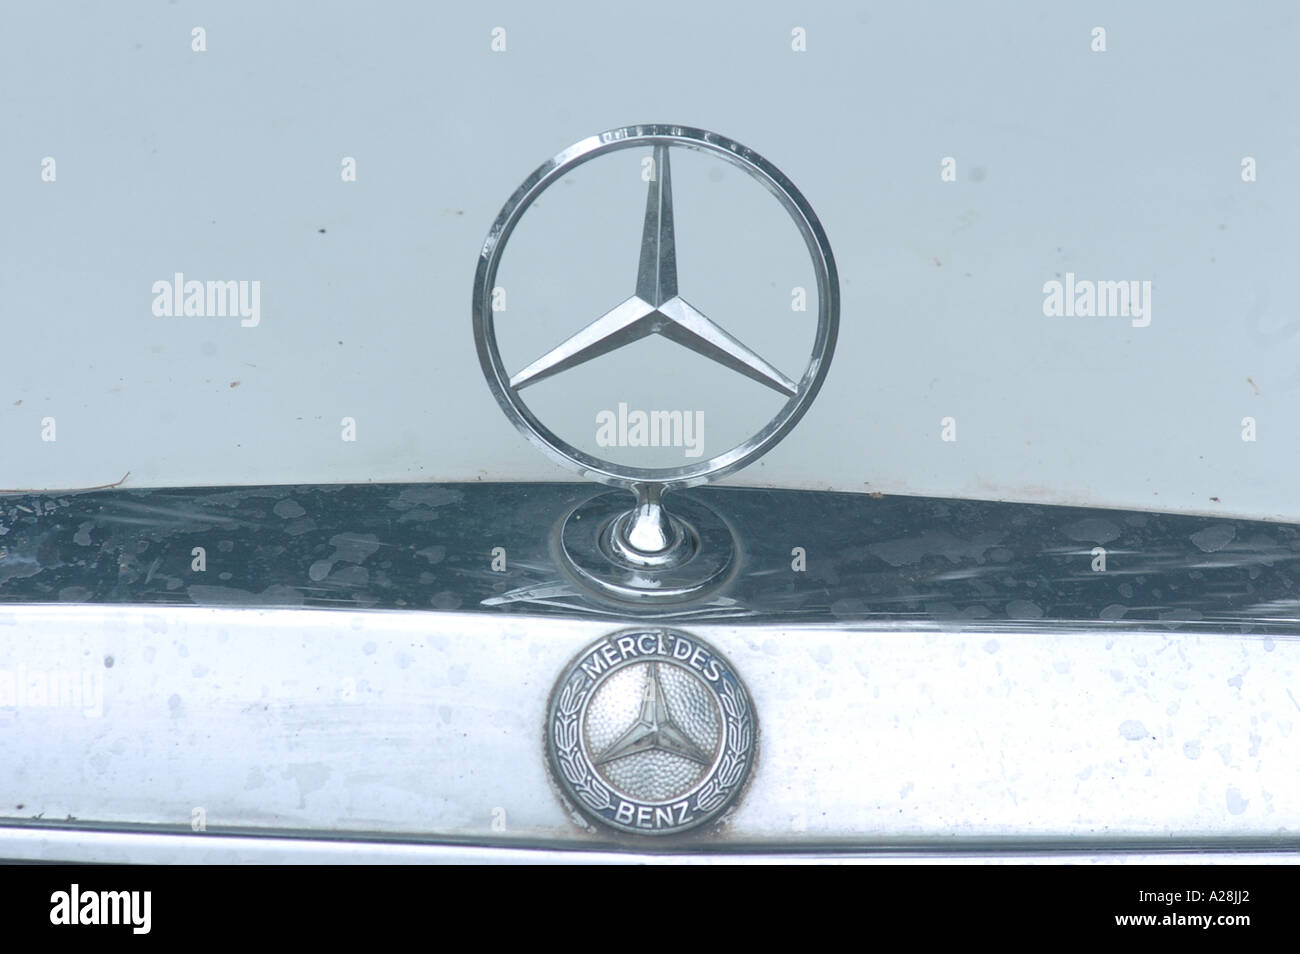 VCA76539 Round symbol Emblem of Mercedes Benz car Stock Photo